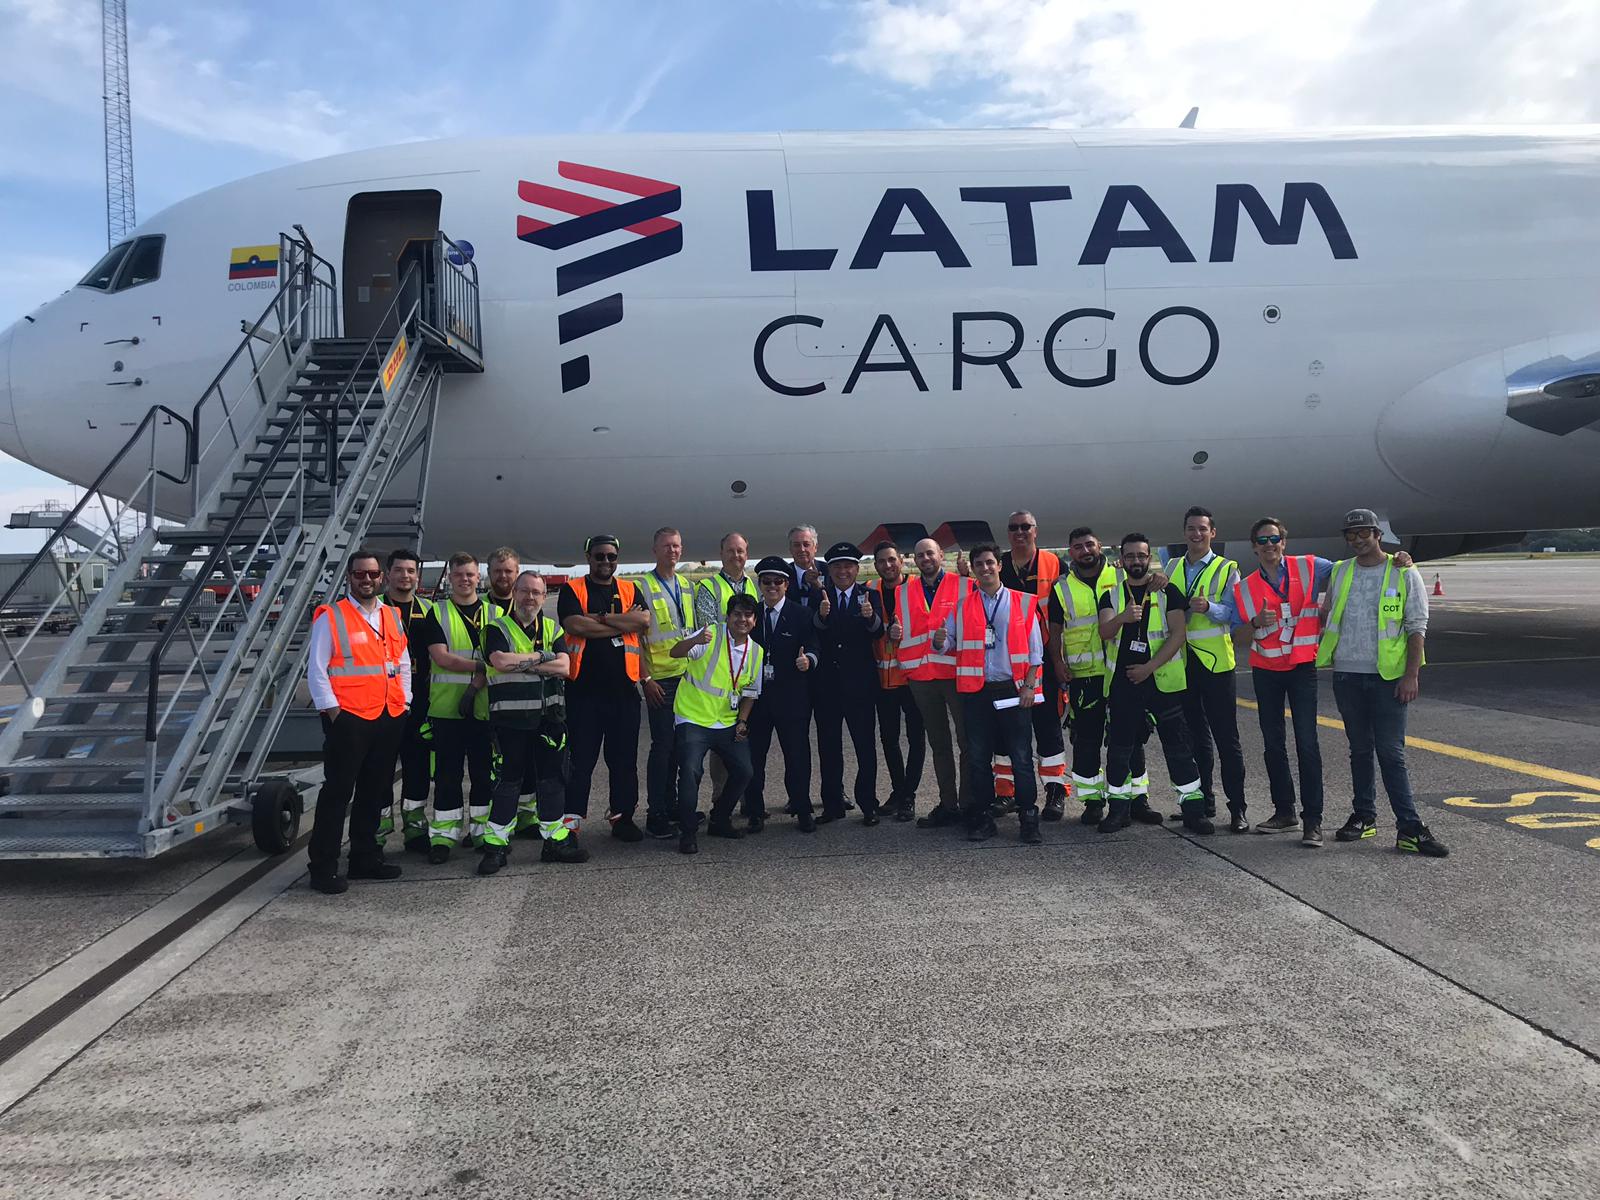 https://www.aircargonews.net/wp-content/uploads/2019/06/LATAM-Cargo-and-Copenhagen-Airports-team.jpg